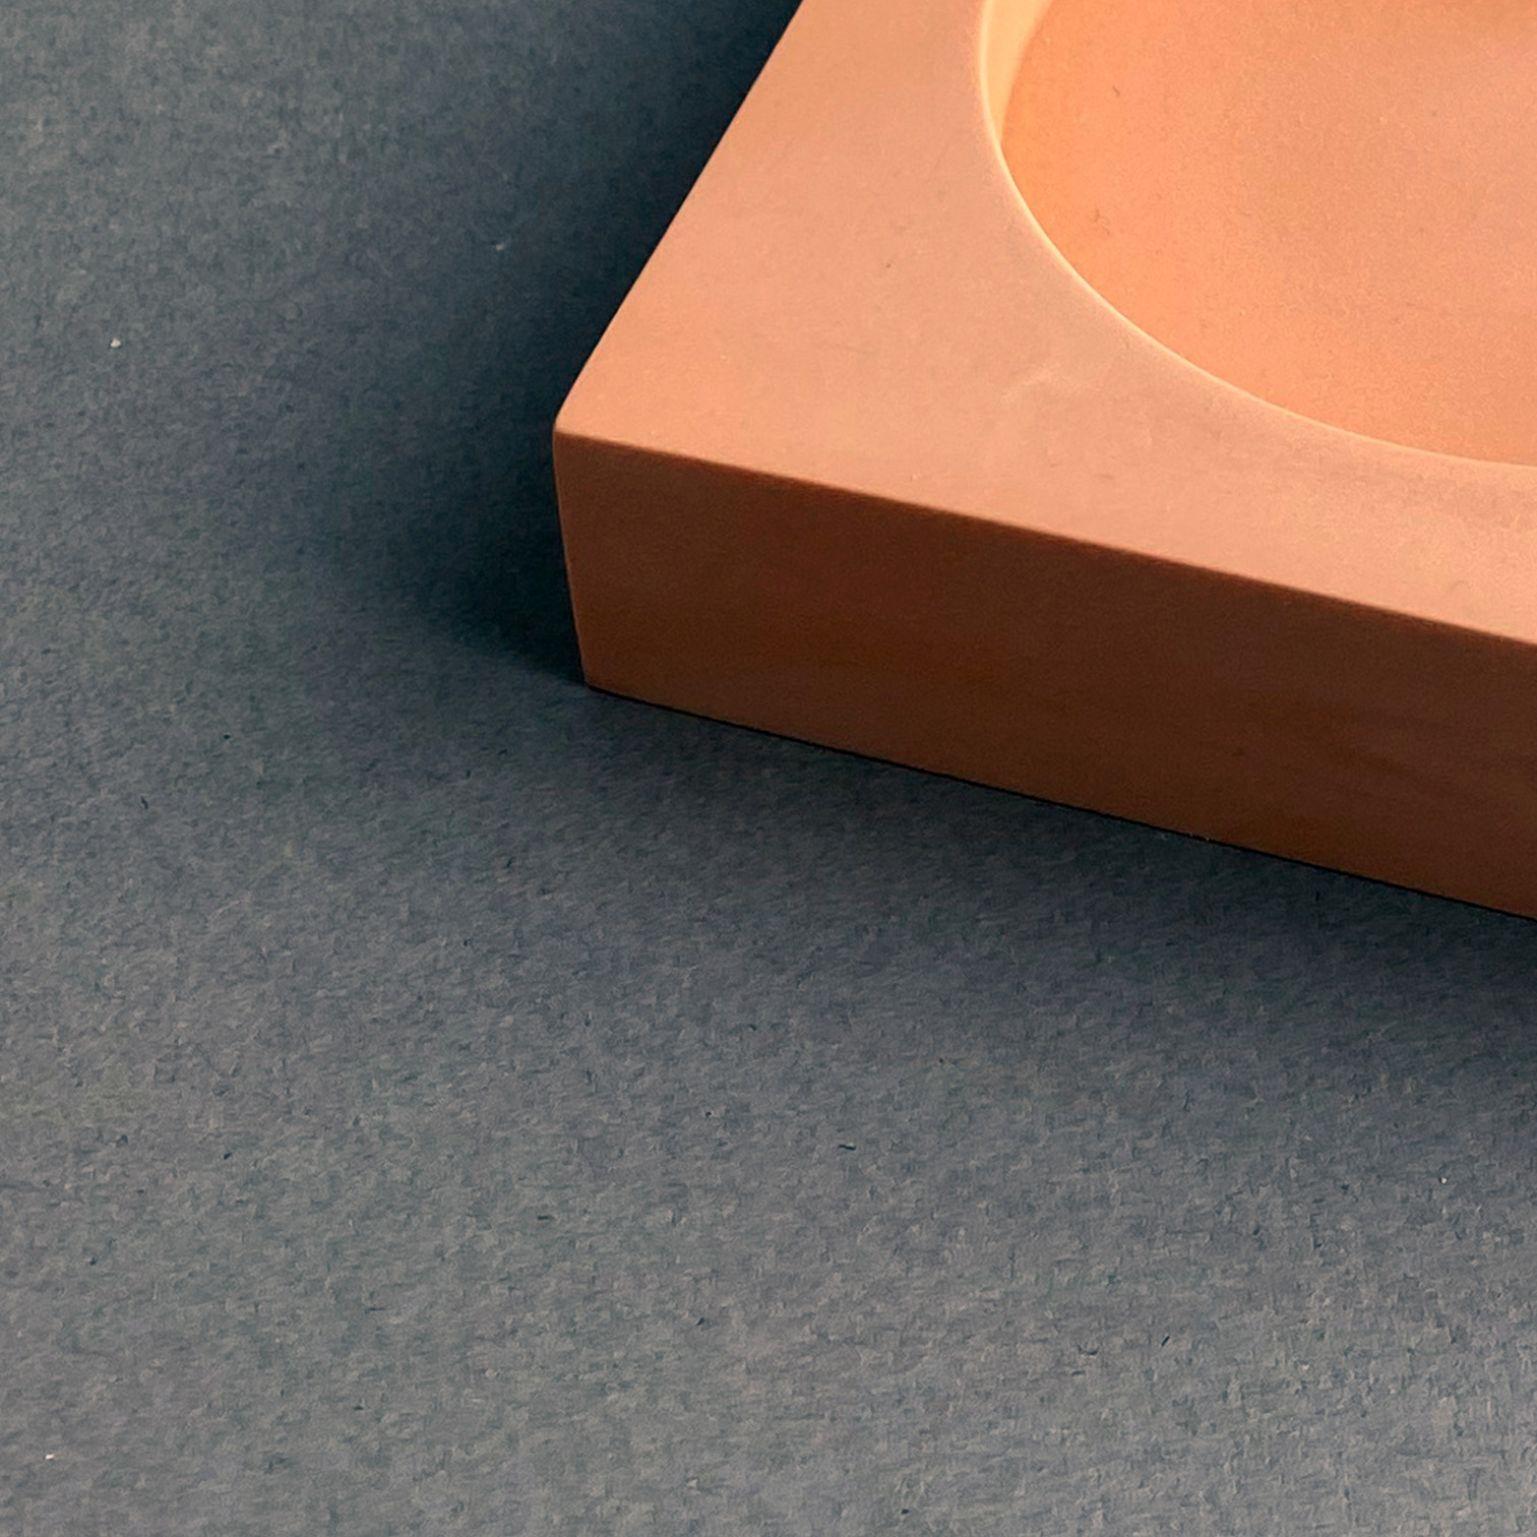 Pressed Peach Bowl Mould Project by Theodora Alfredsdottir